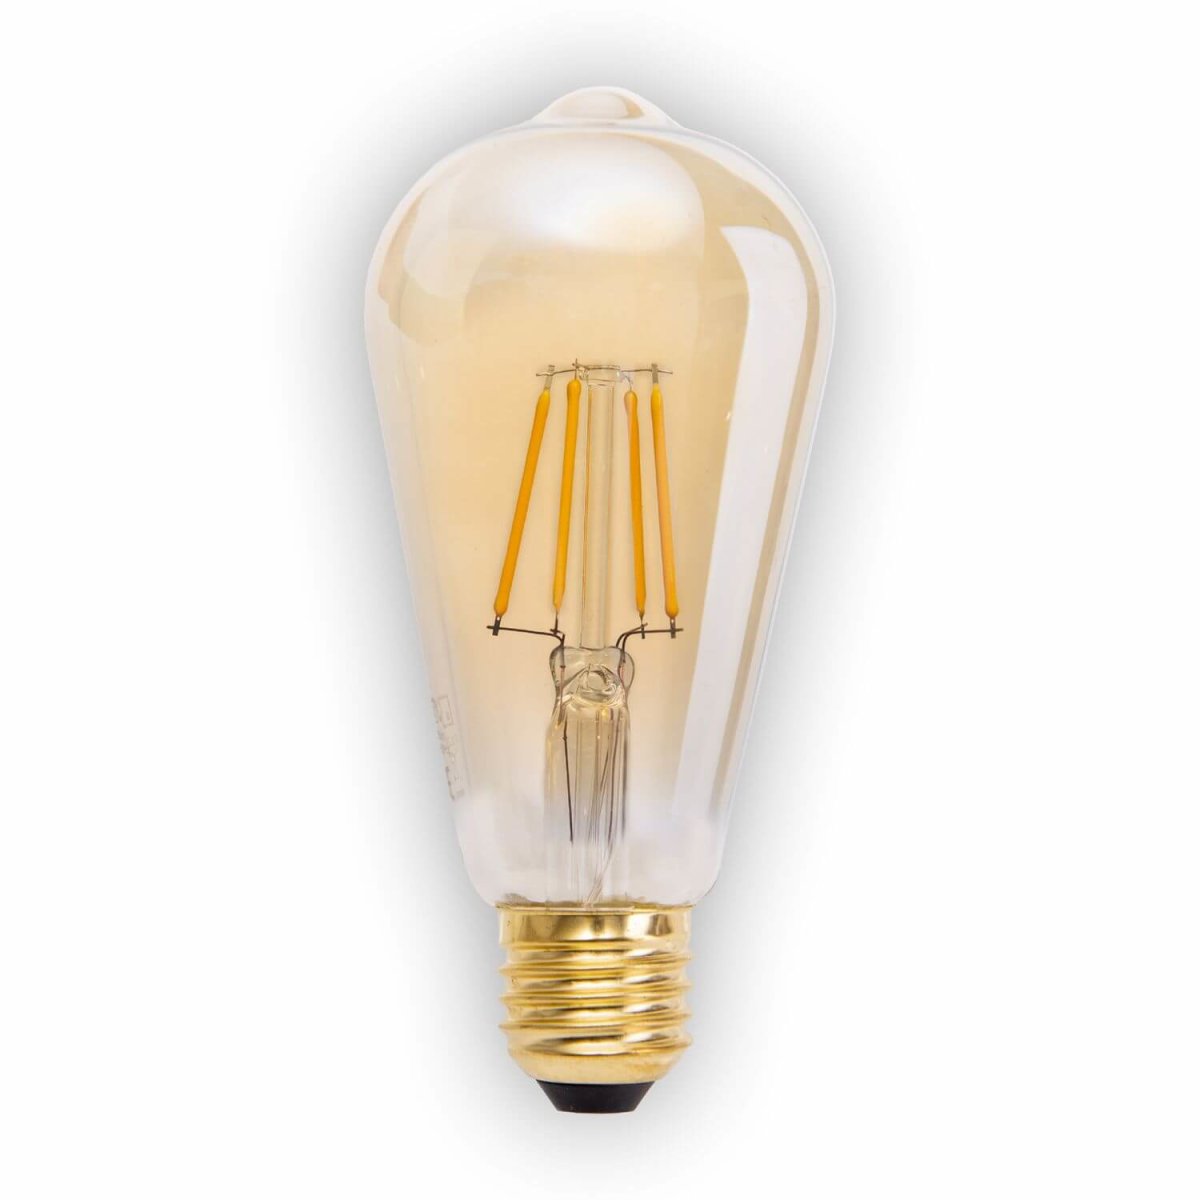 Näve LAMPE 4106804 LED Ø6,4cm Warmweiss weiß dimmbar Leuchtmittel LED